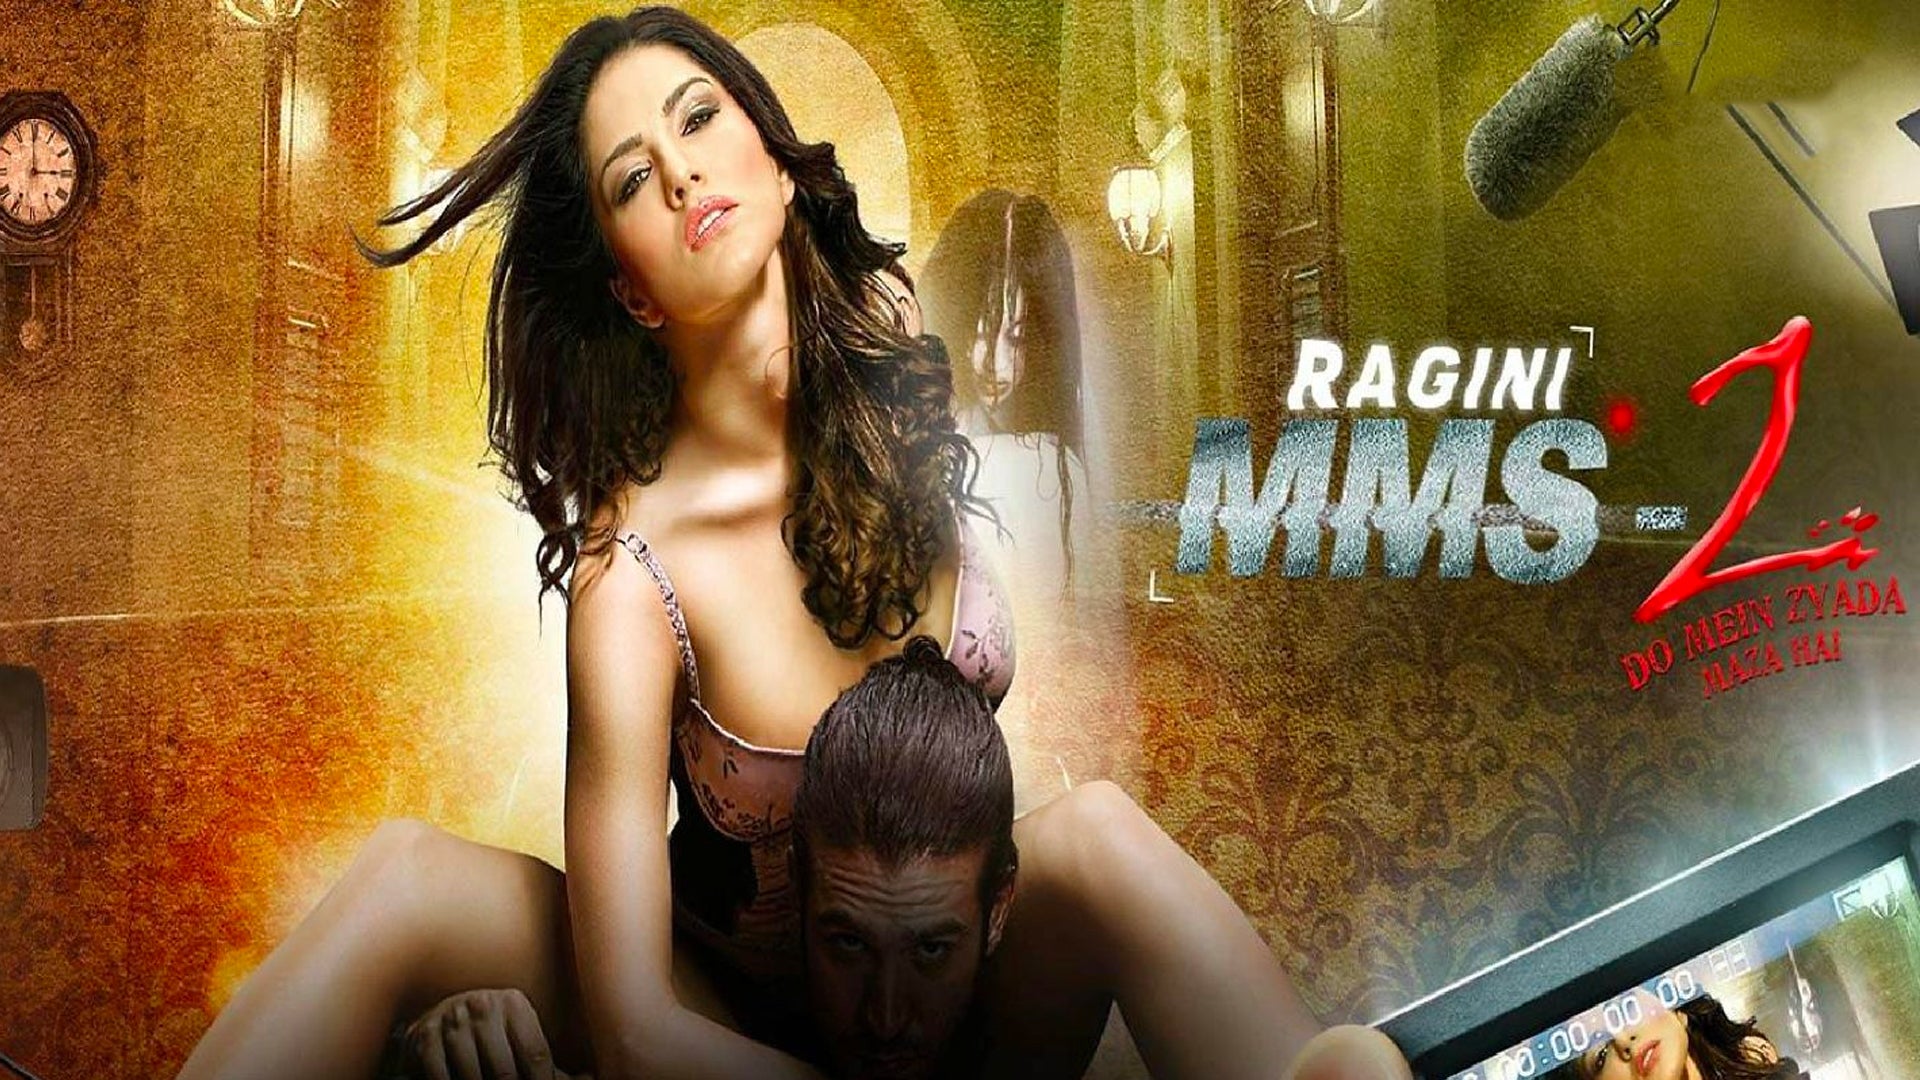 Ragini Mms 2 Xxx Sex Video - Ragini MMS 2 (2014) Hindi Movie: Watch Full HD Movie Online On JioCinema